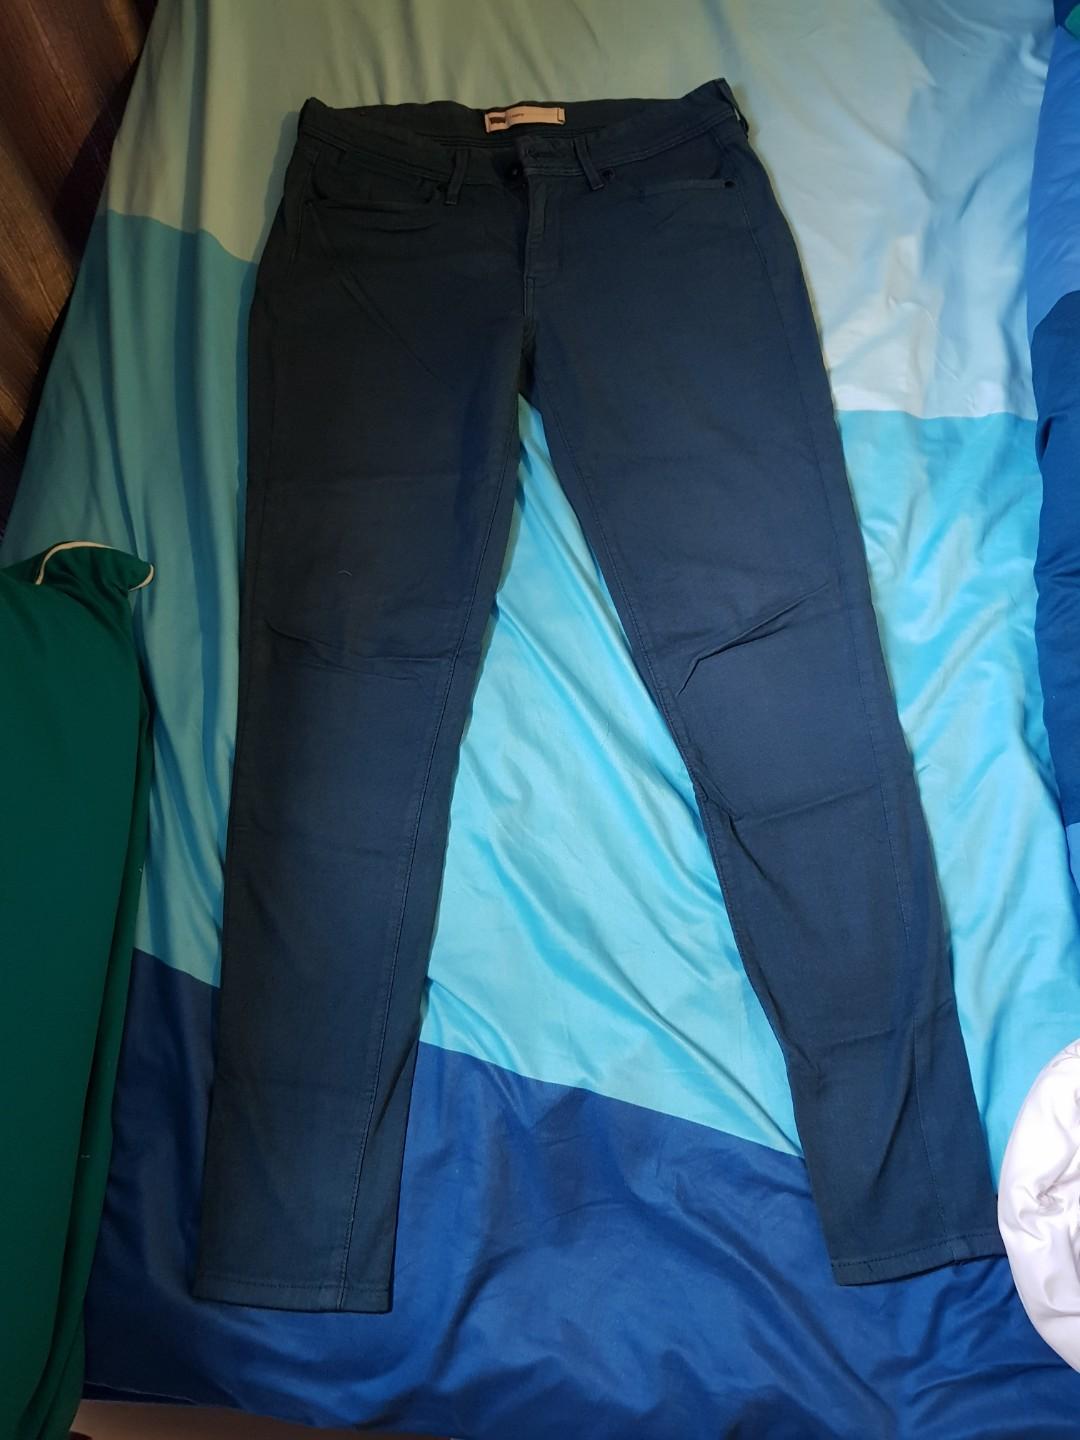 royal blue levi jeans